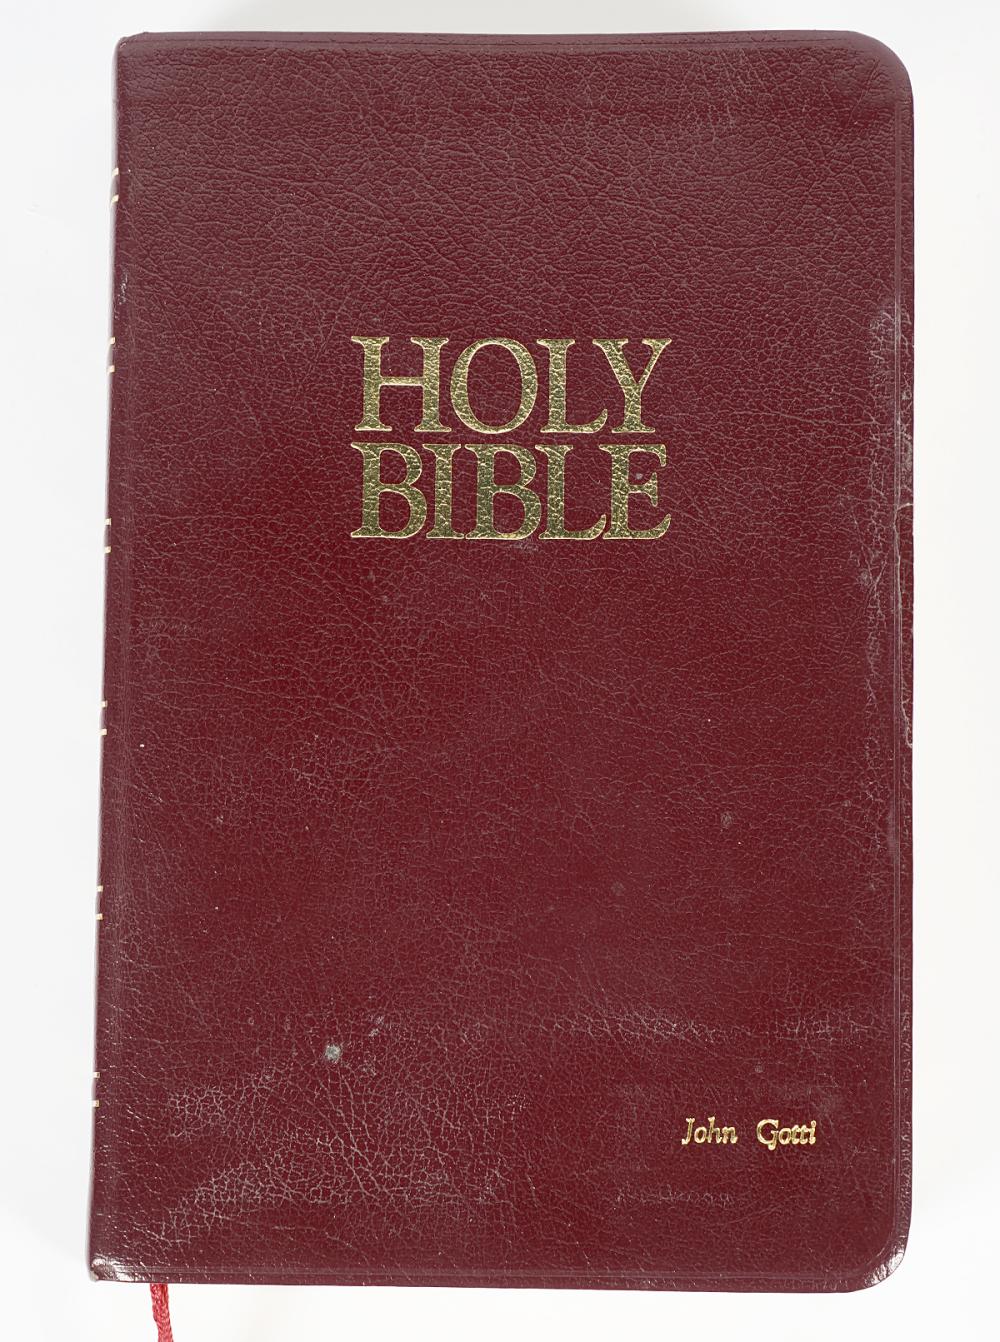 JOHN GOTTI HOLY BIBLE GREETING 337e5a